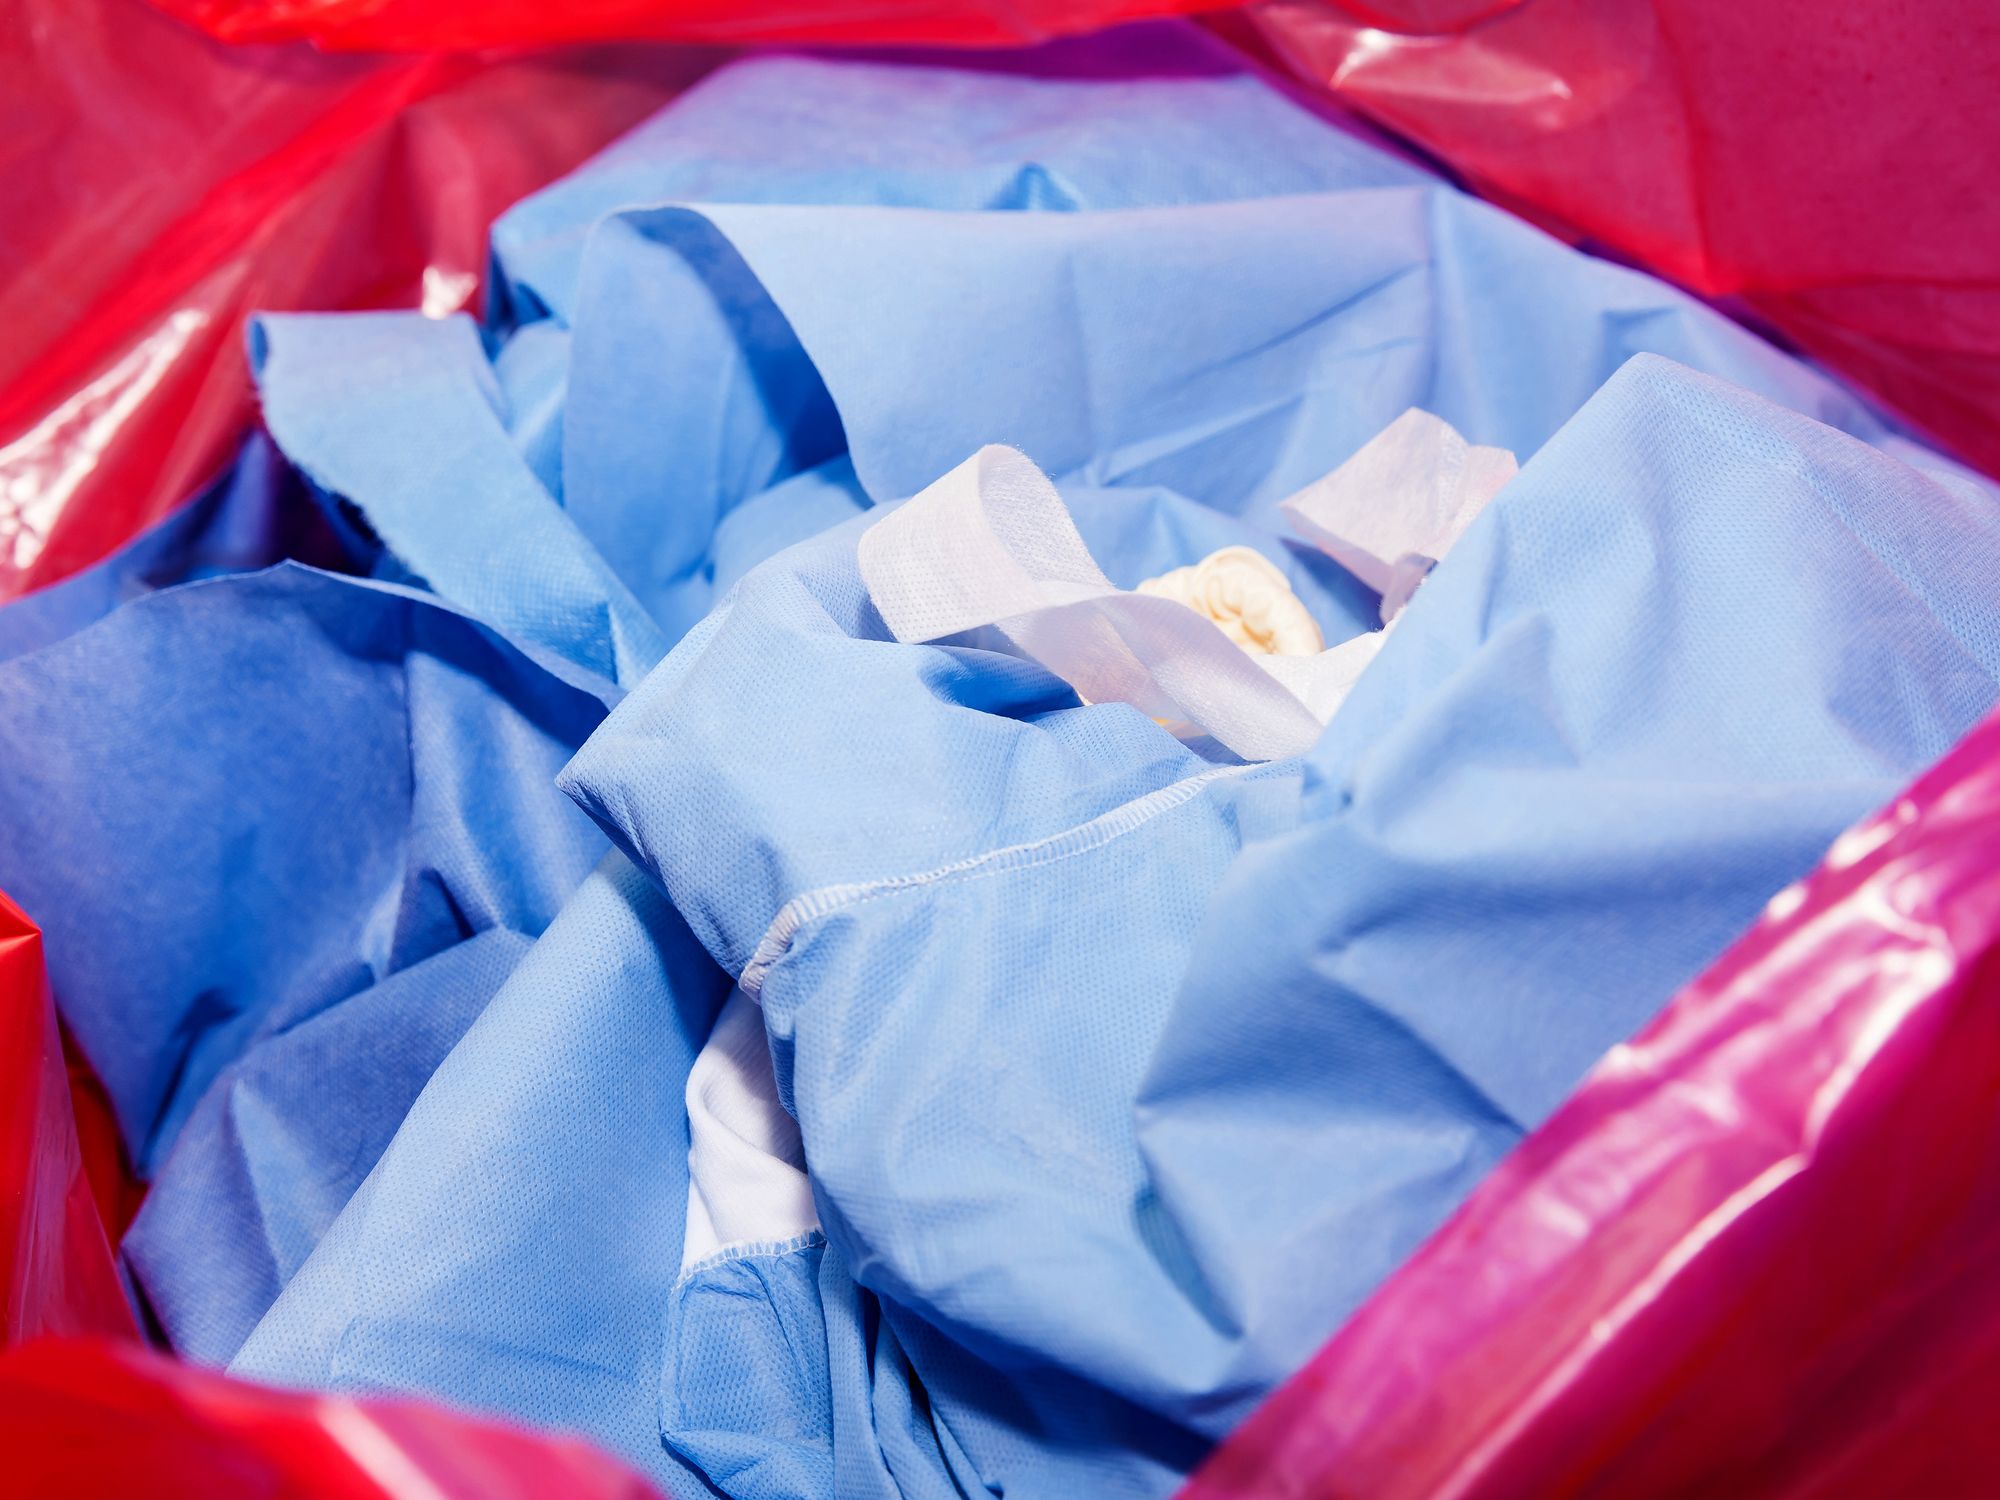 Contaminated laundry practices